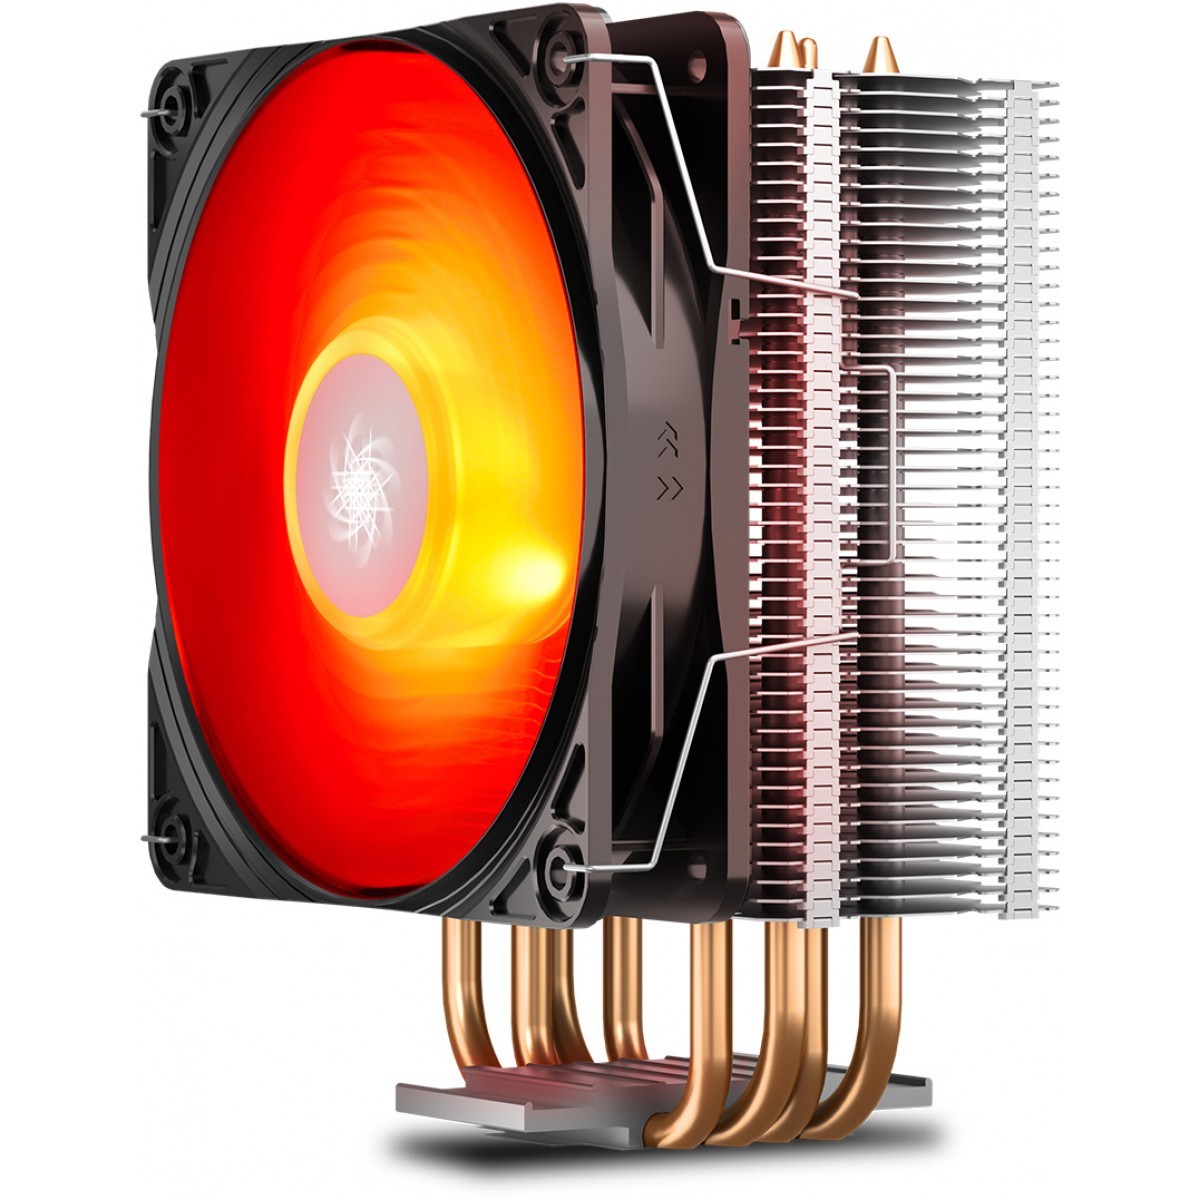 Kit Upgrade Biostar GeForce GT 710 2GB + Ryzen 3 3300x + Biostar A320MH + Cooler de Brinde